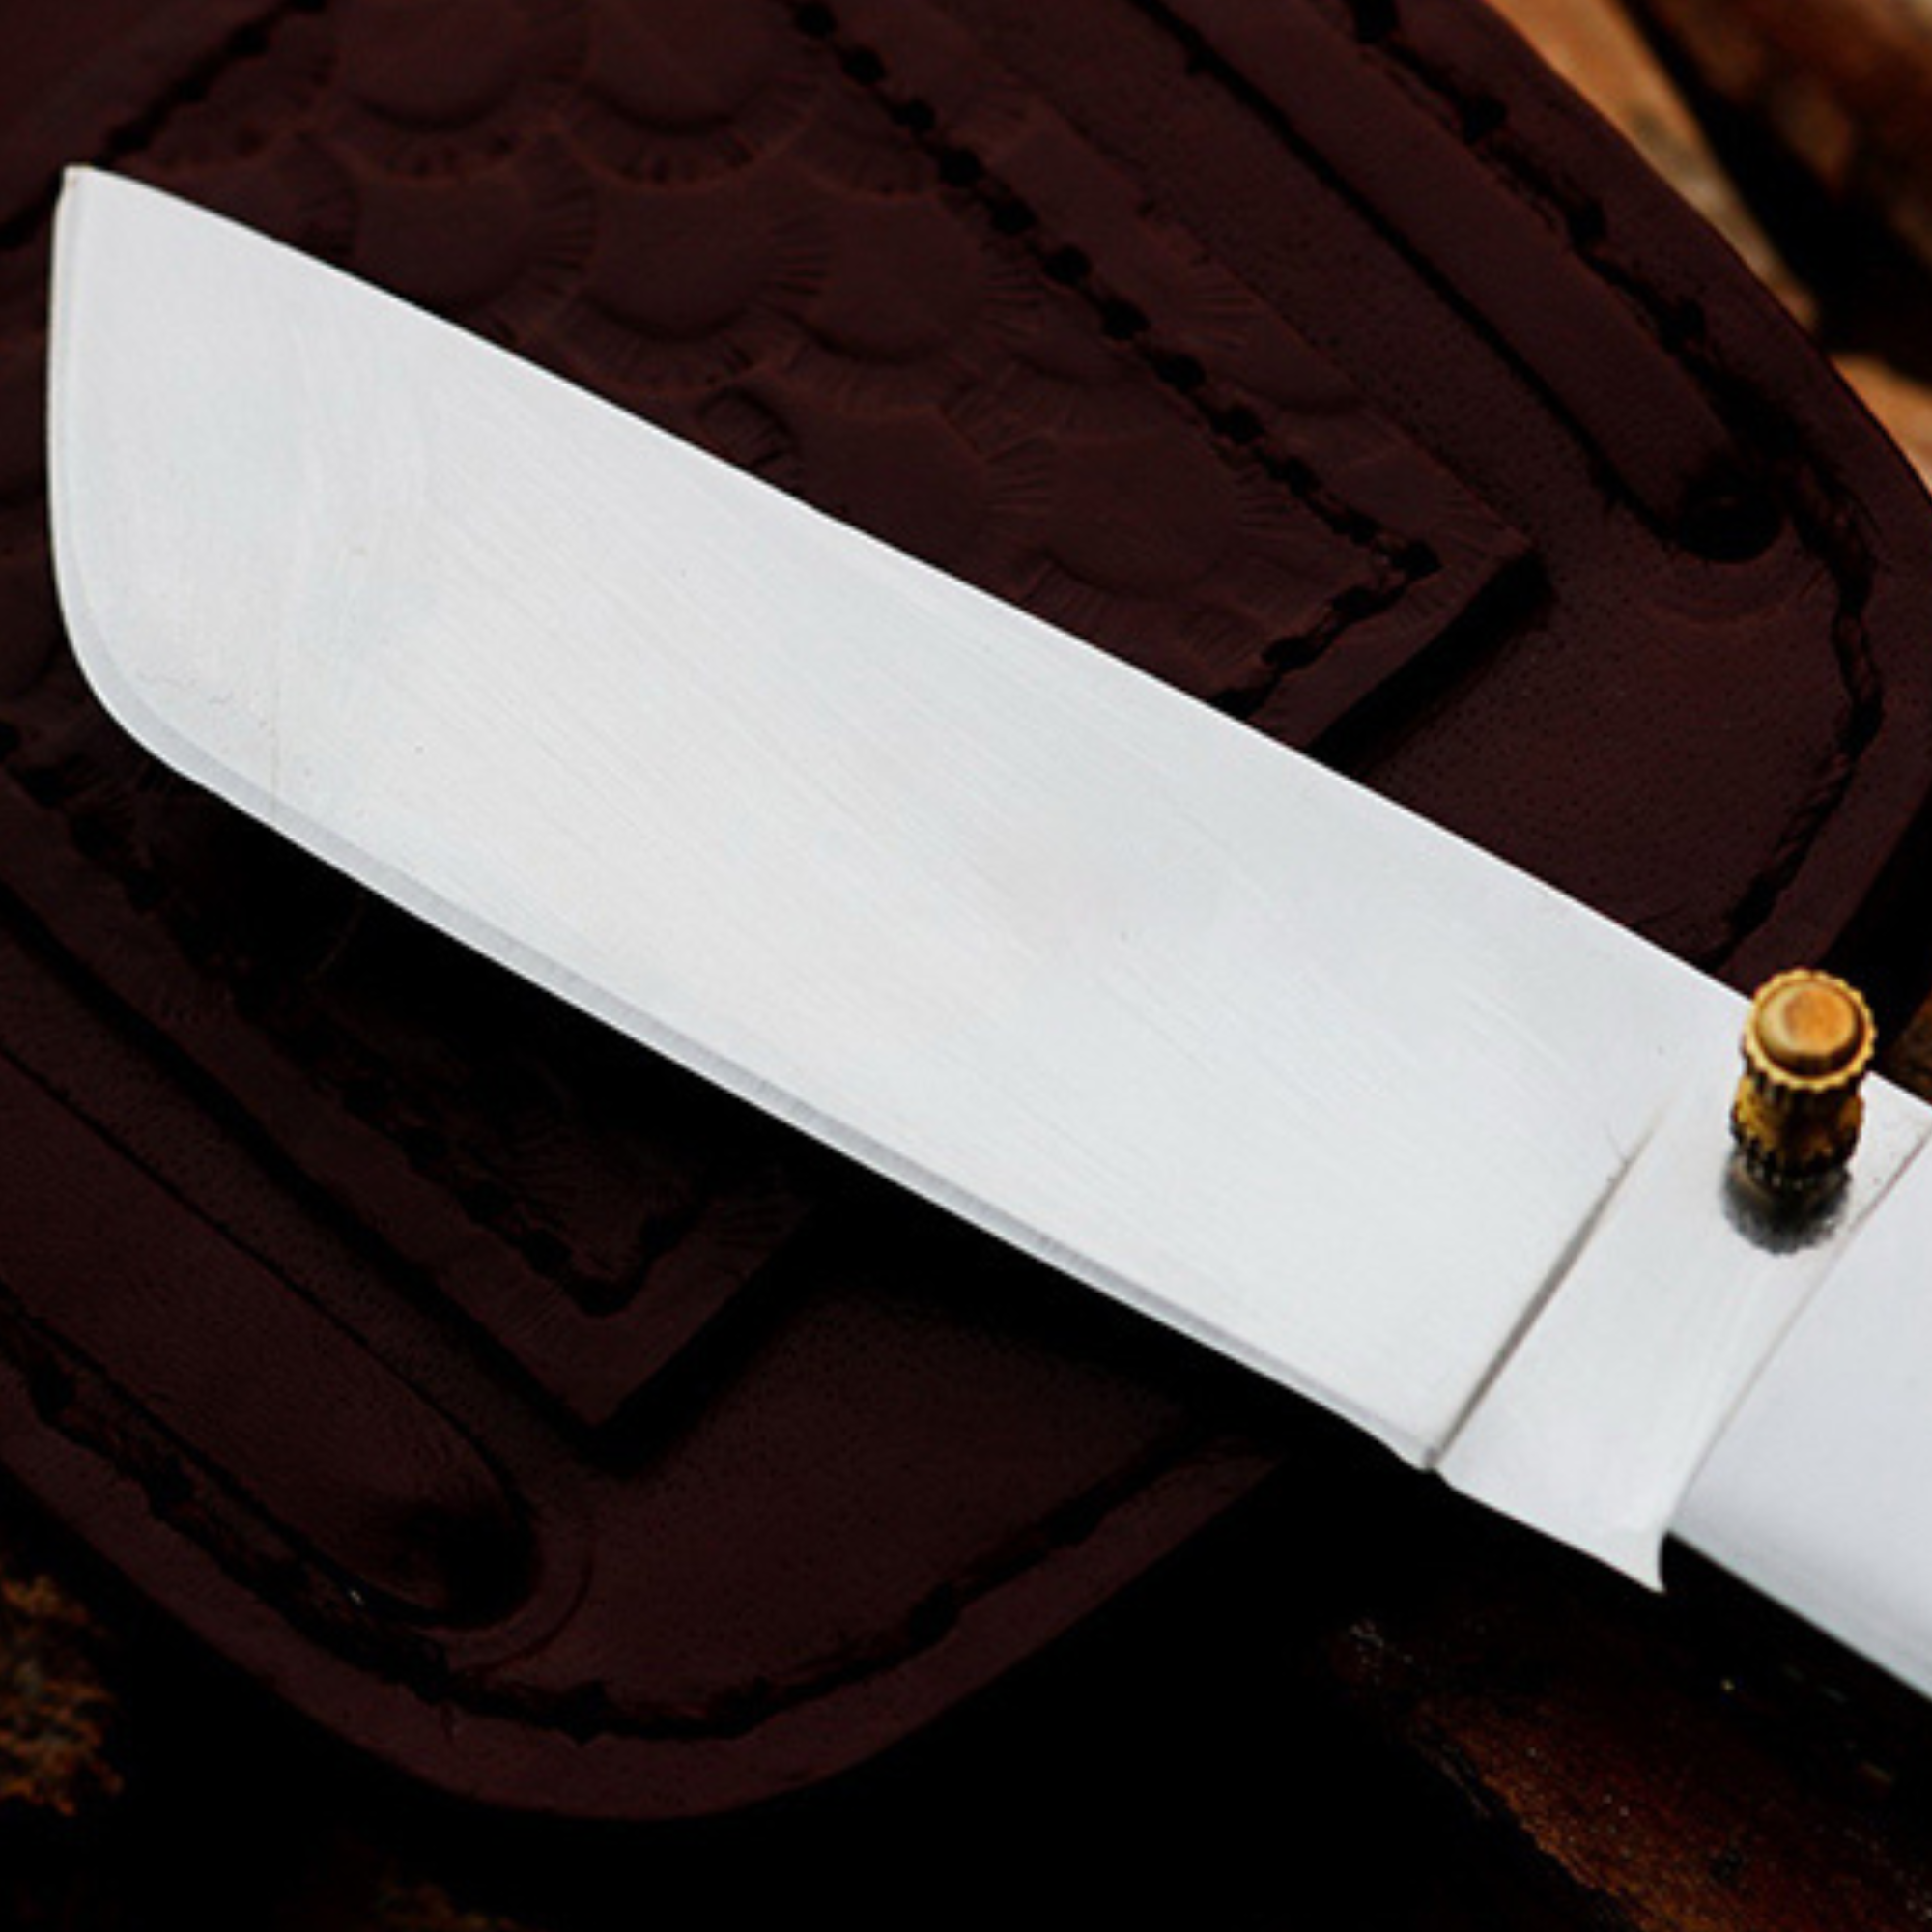 Black Scorpion 8? Long 4?Blade? 6oz 440c High Mirror Polished Pocket knives Handmade Damascus Pocket Folding Knife Handmade Word Class knives